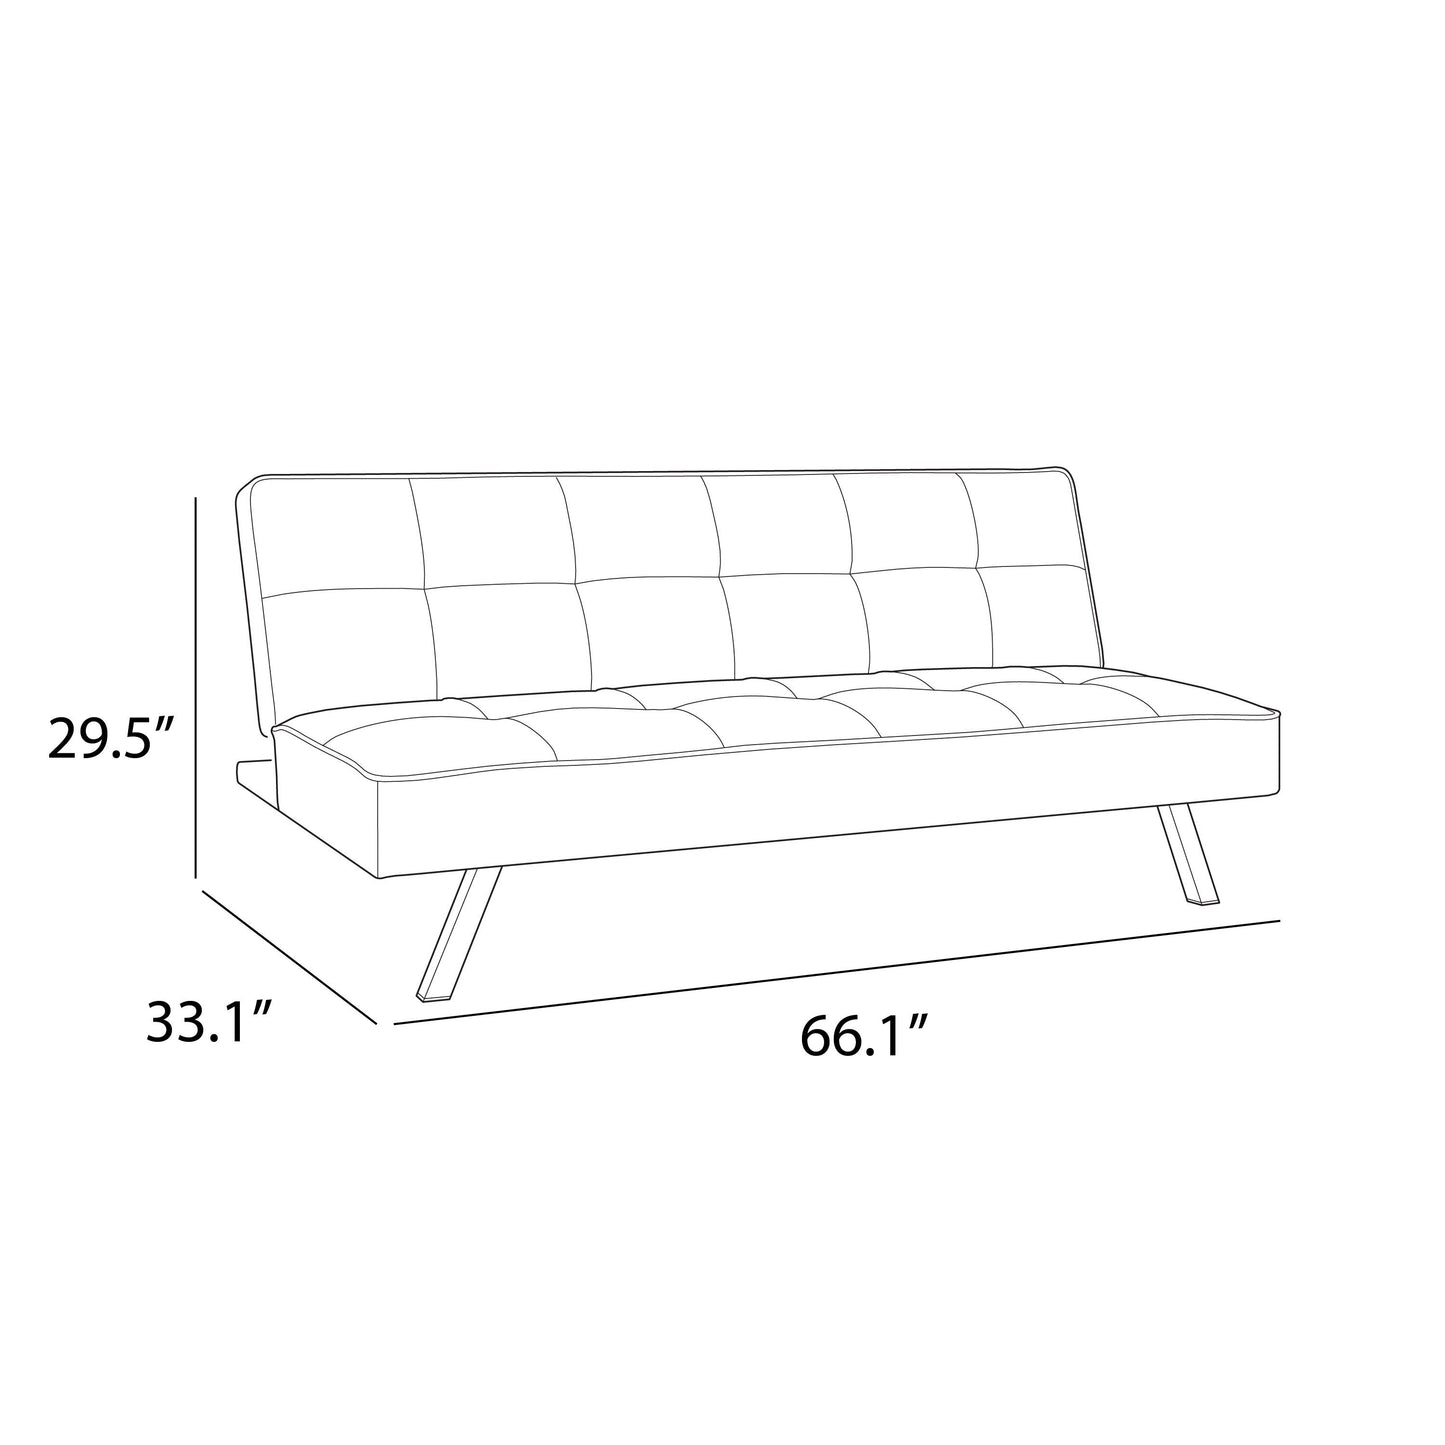 Modern Futon Sofa Bed Dimensions